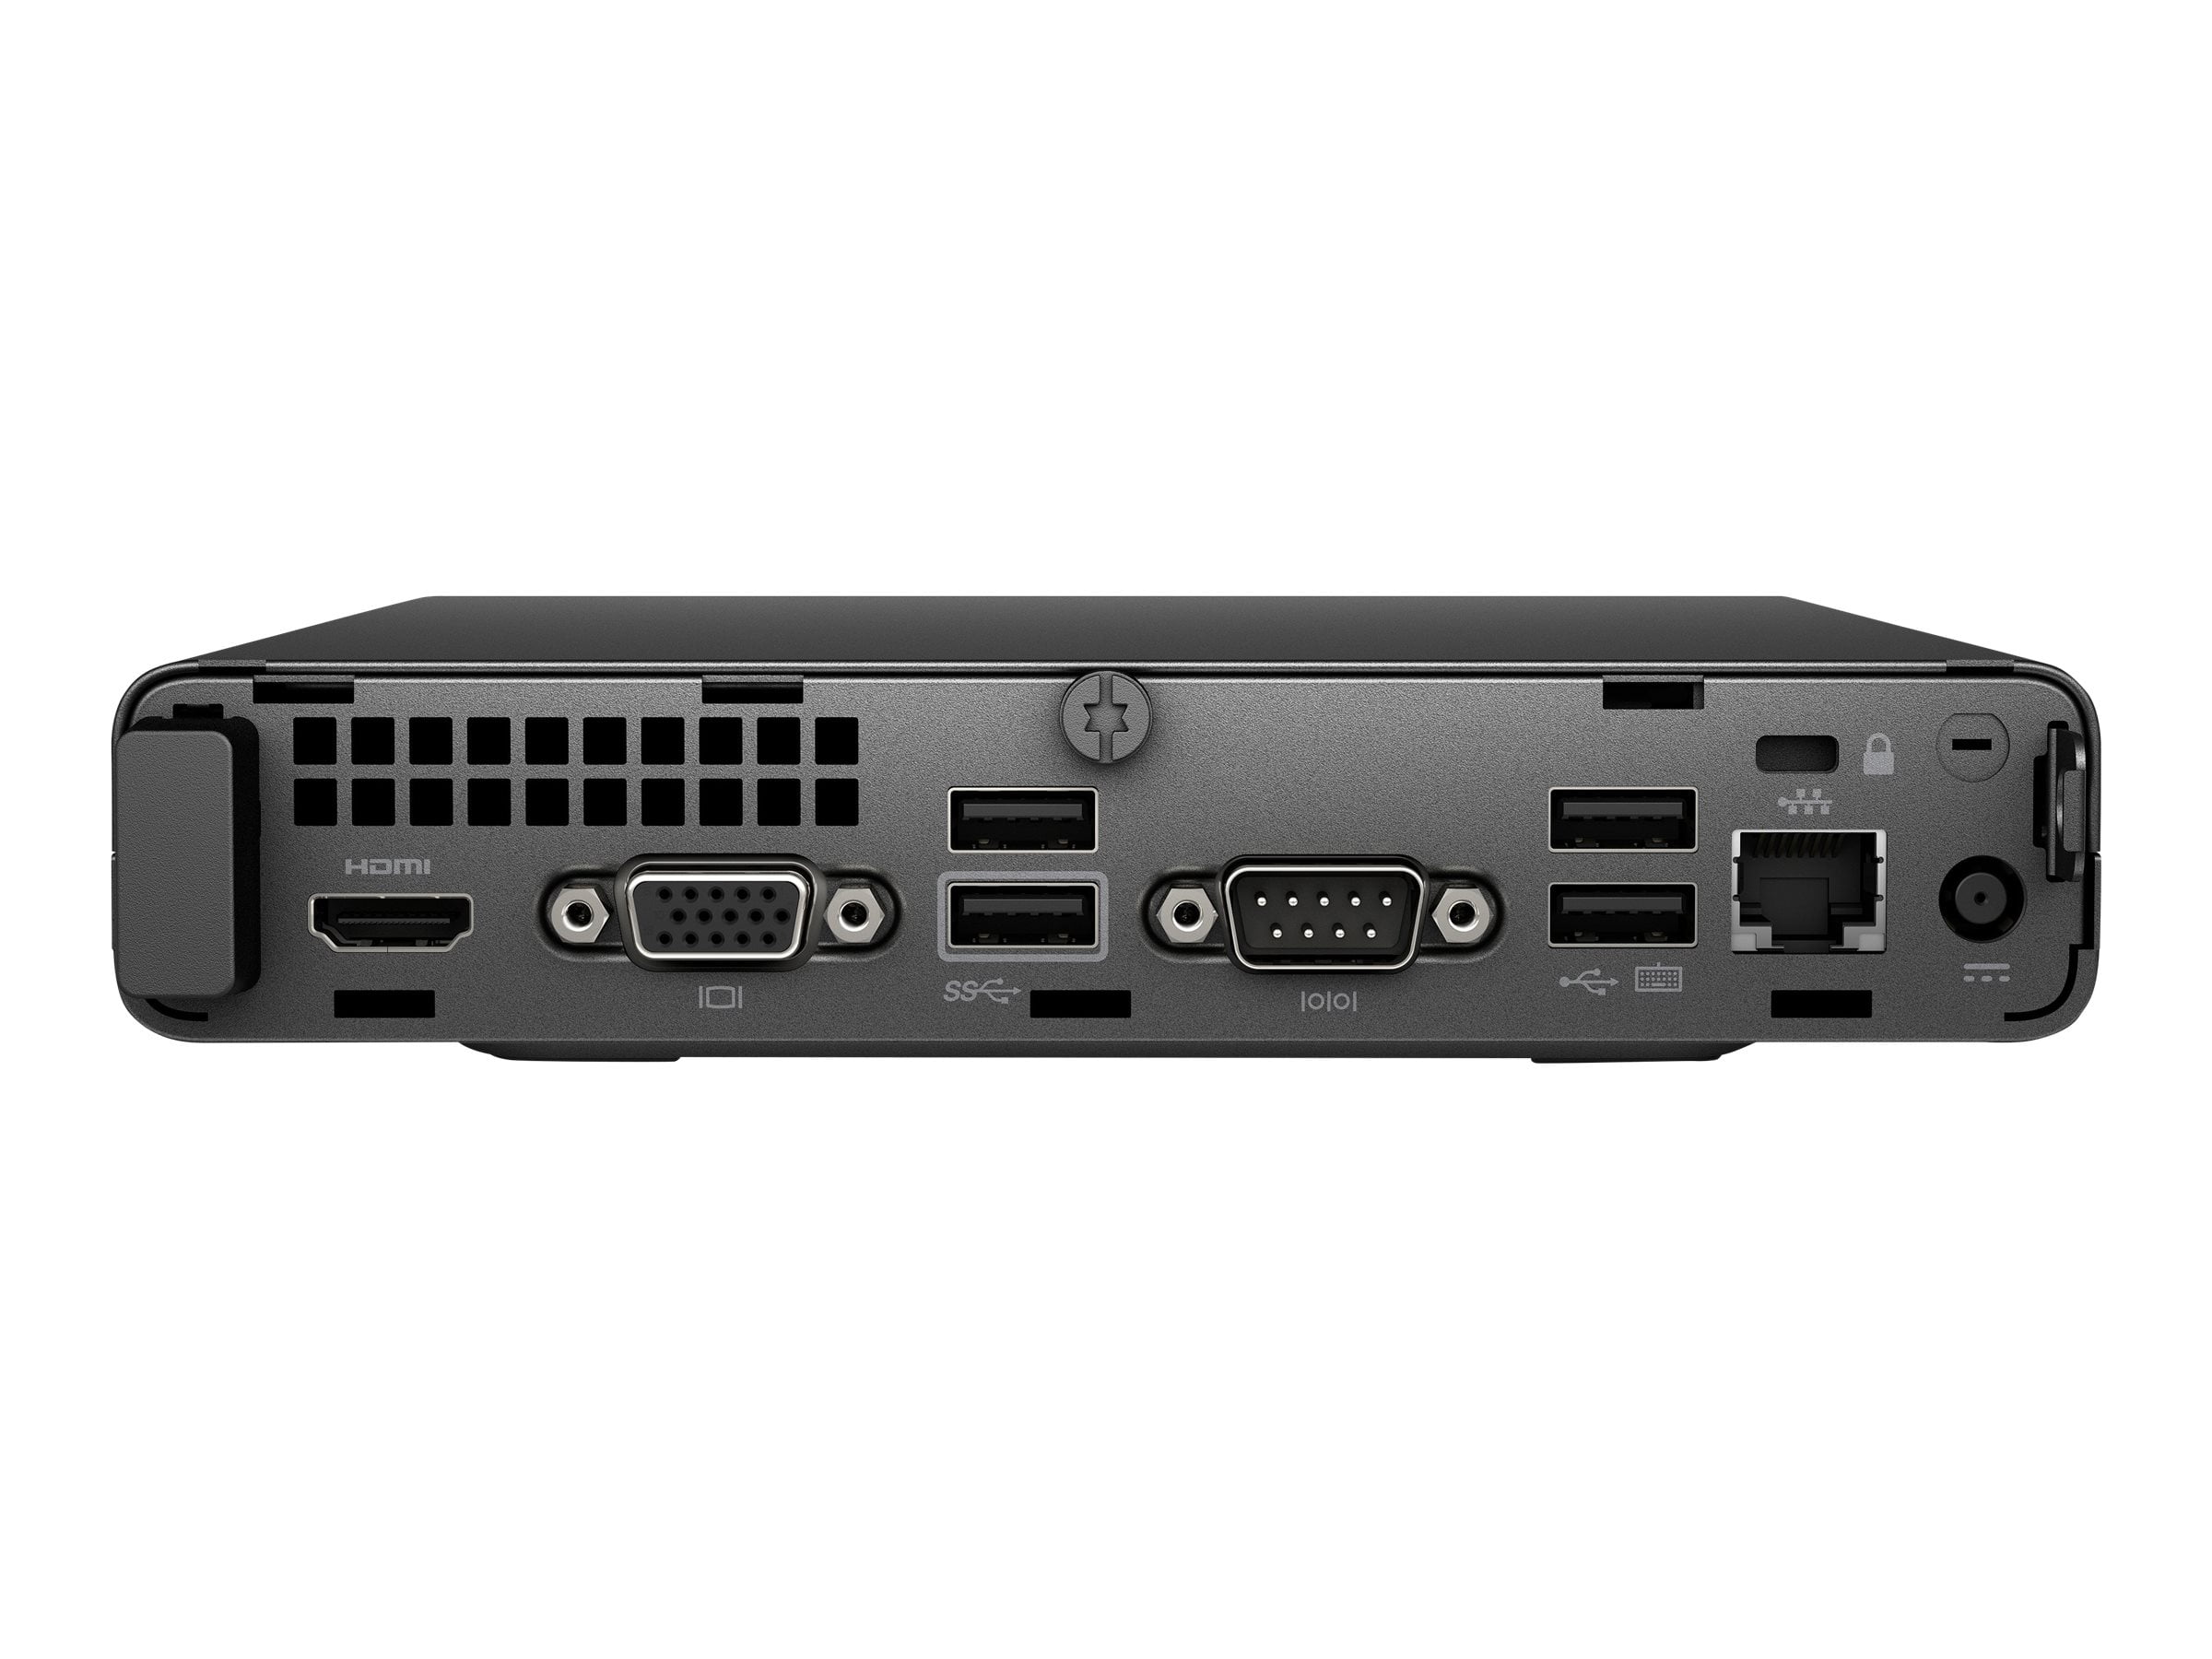 annuleren kruis Salie HP 260 G3 - Mini desktop - Core i3 7130U / 2.7 GHz - RAM 4 GB - HDD 500 GB  - HD Graphics 620 - GigE - WLAN: 802.11a/b/g/n/ac, Bluetooth 4.2 - FreeDOS  - monitor: none - Walmart.com